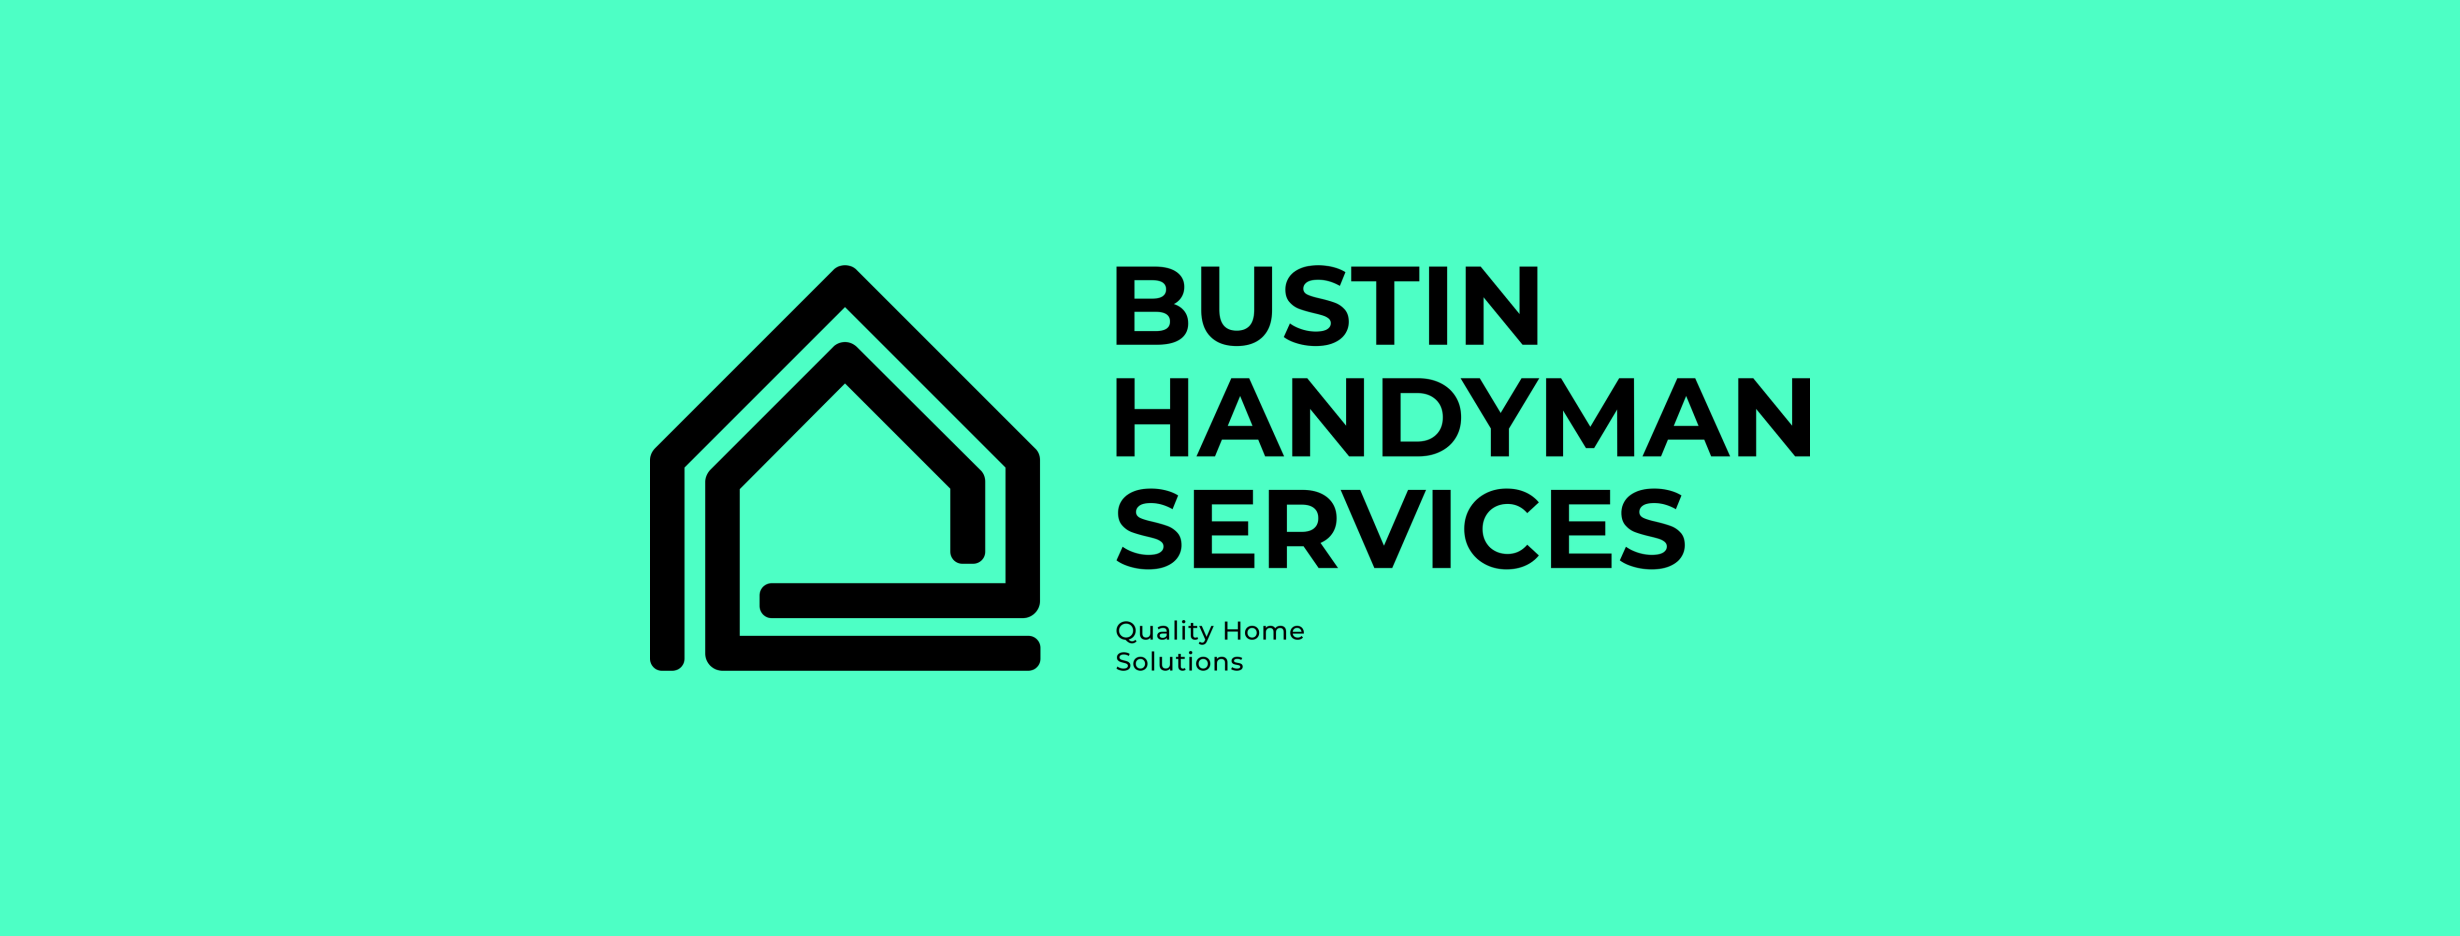 Bustin Handyman Services Logo